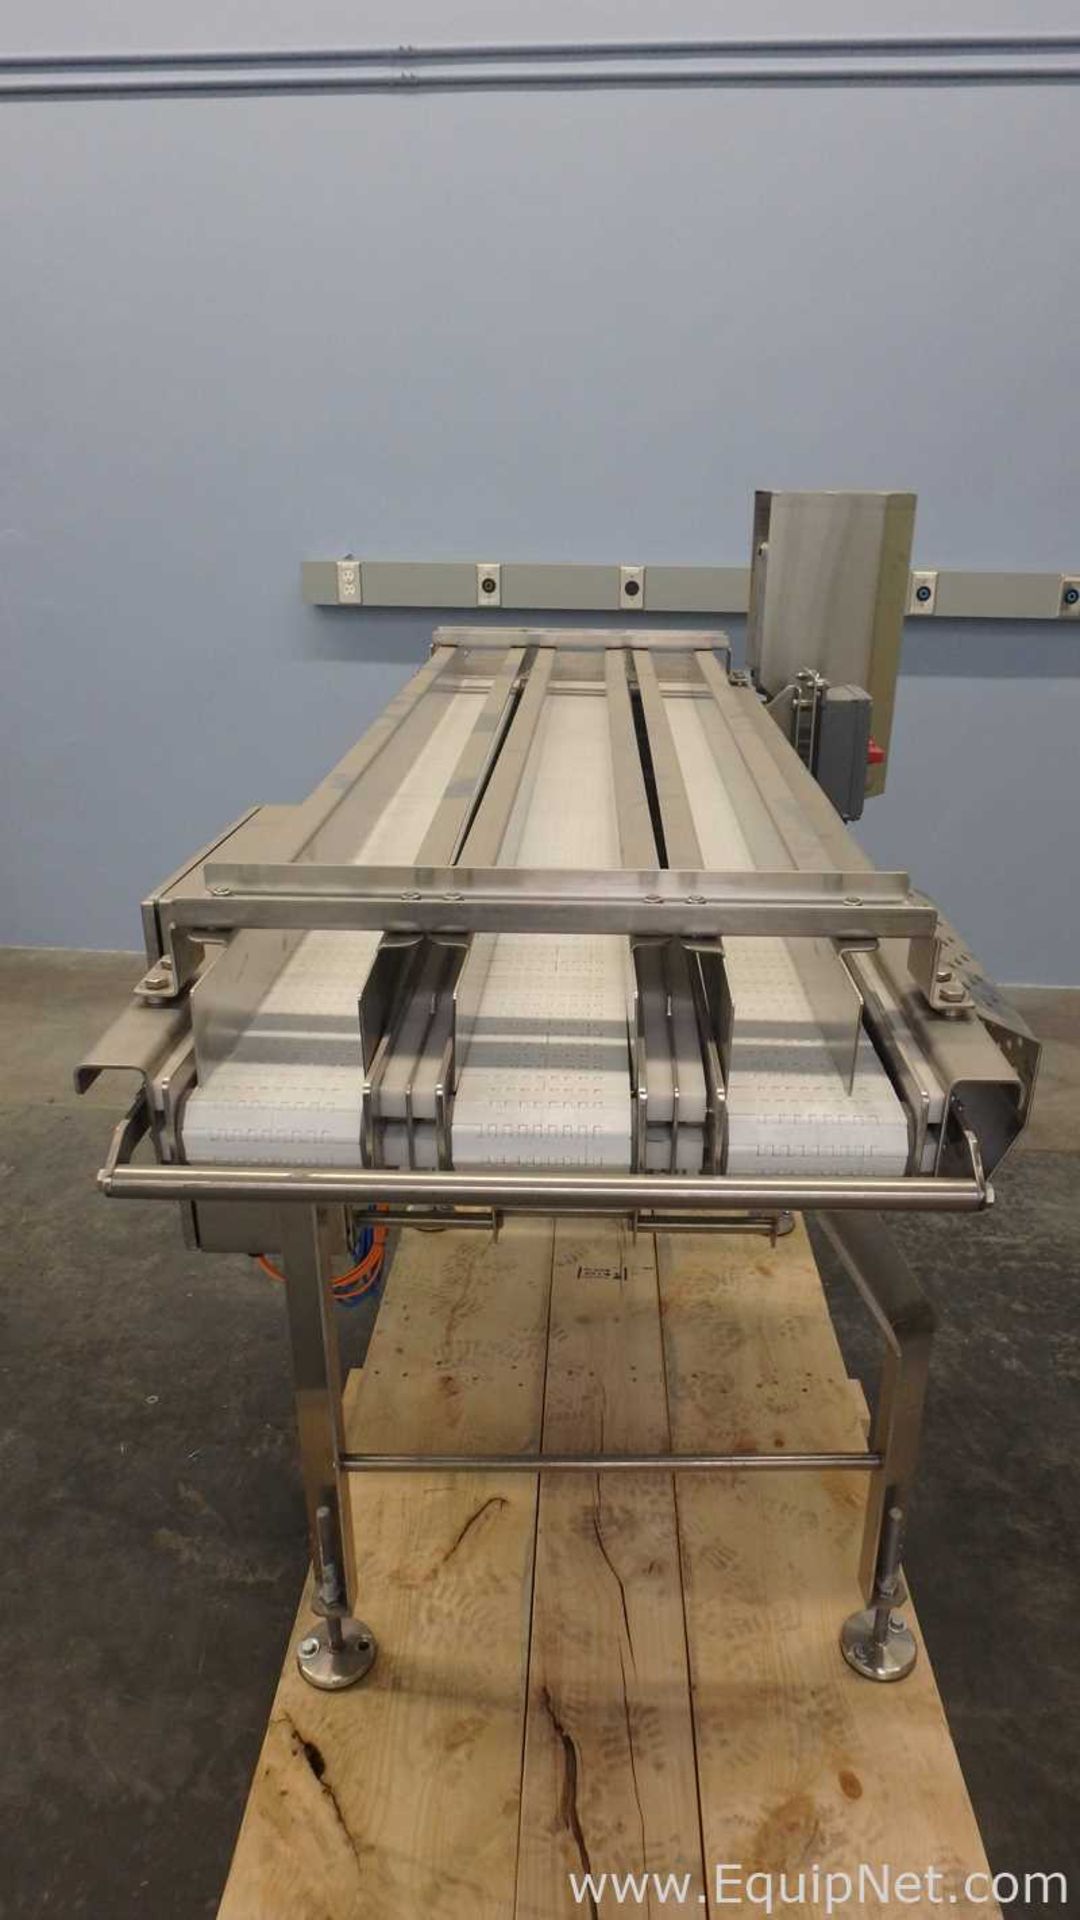 KleenLine Engineered Stainless Steel Conveyor Designed for Full Washdown - Image 12 of 30